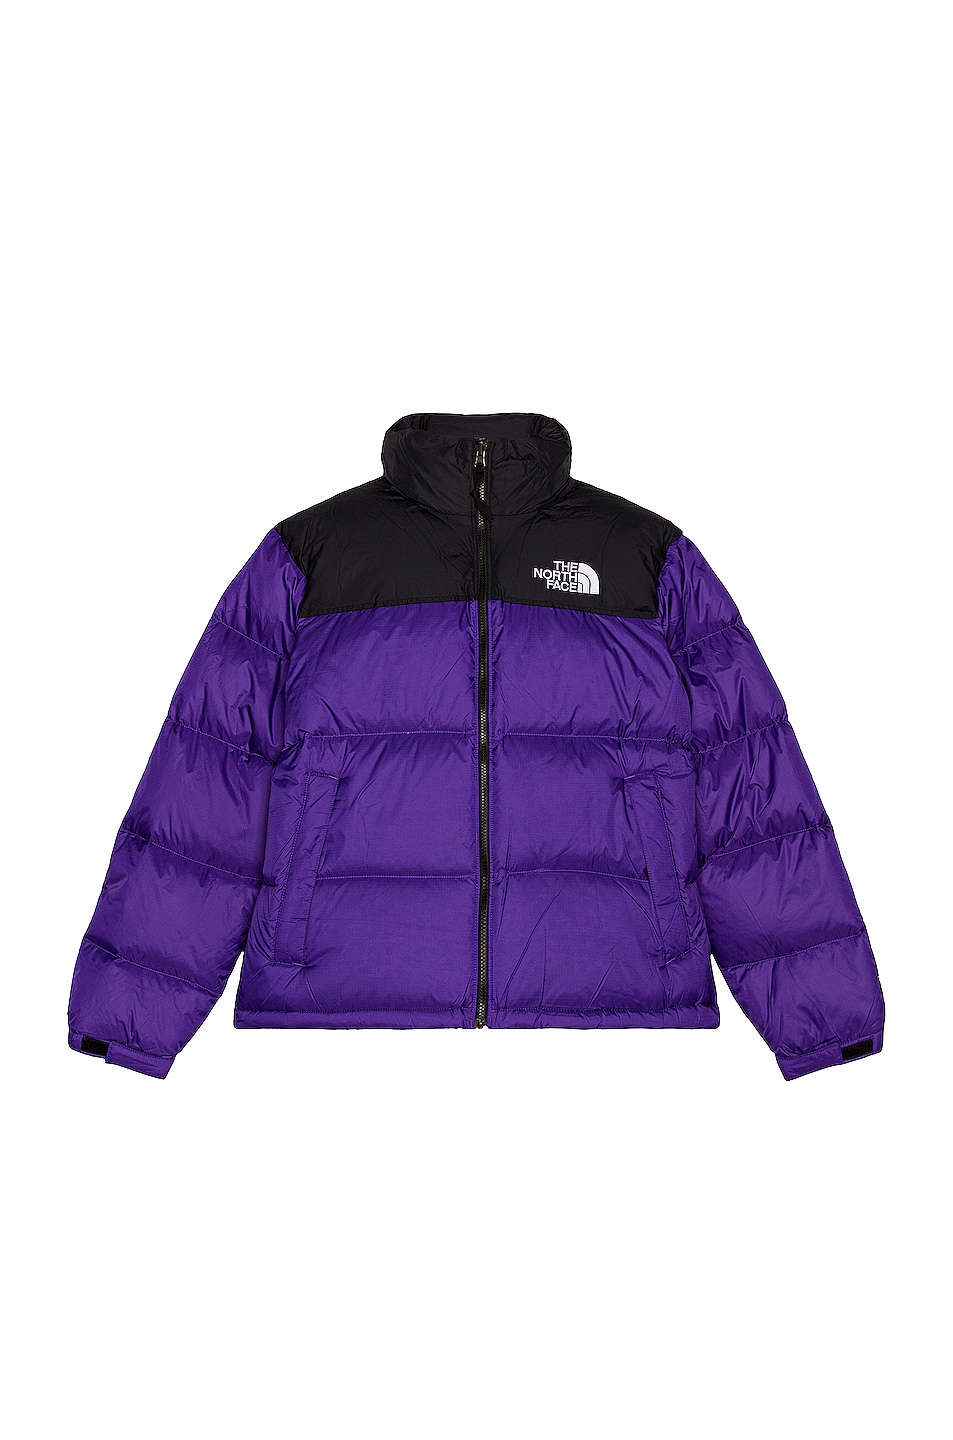 Image 1 of The North Face 1996 Retro Nuptse Jacket in Peak Purple